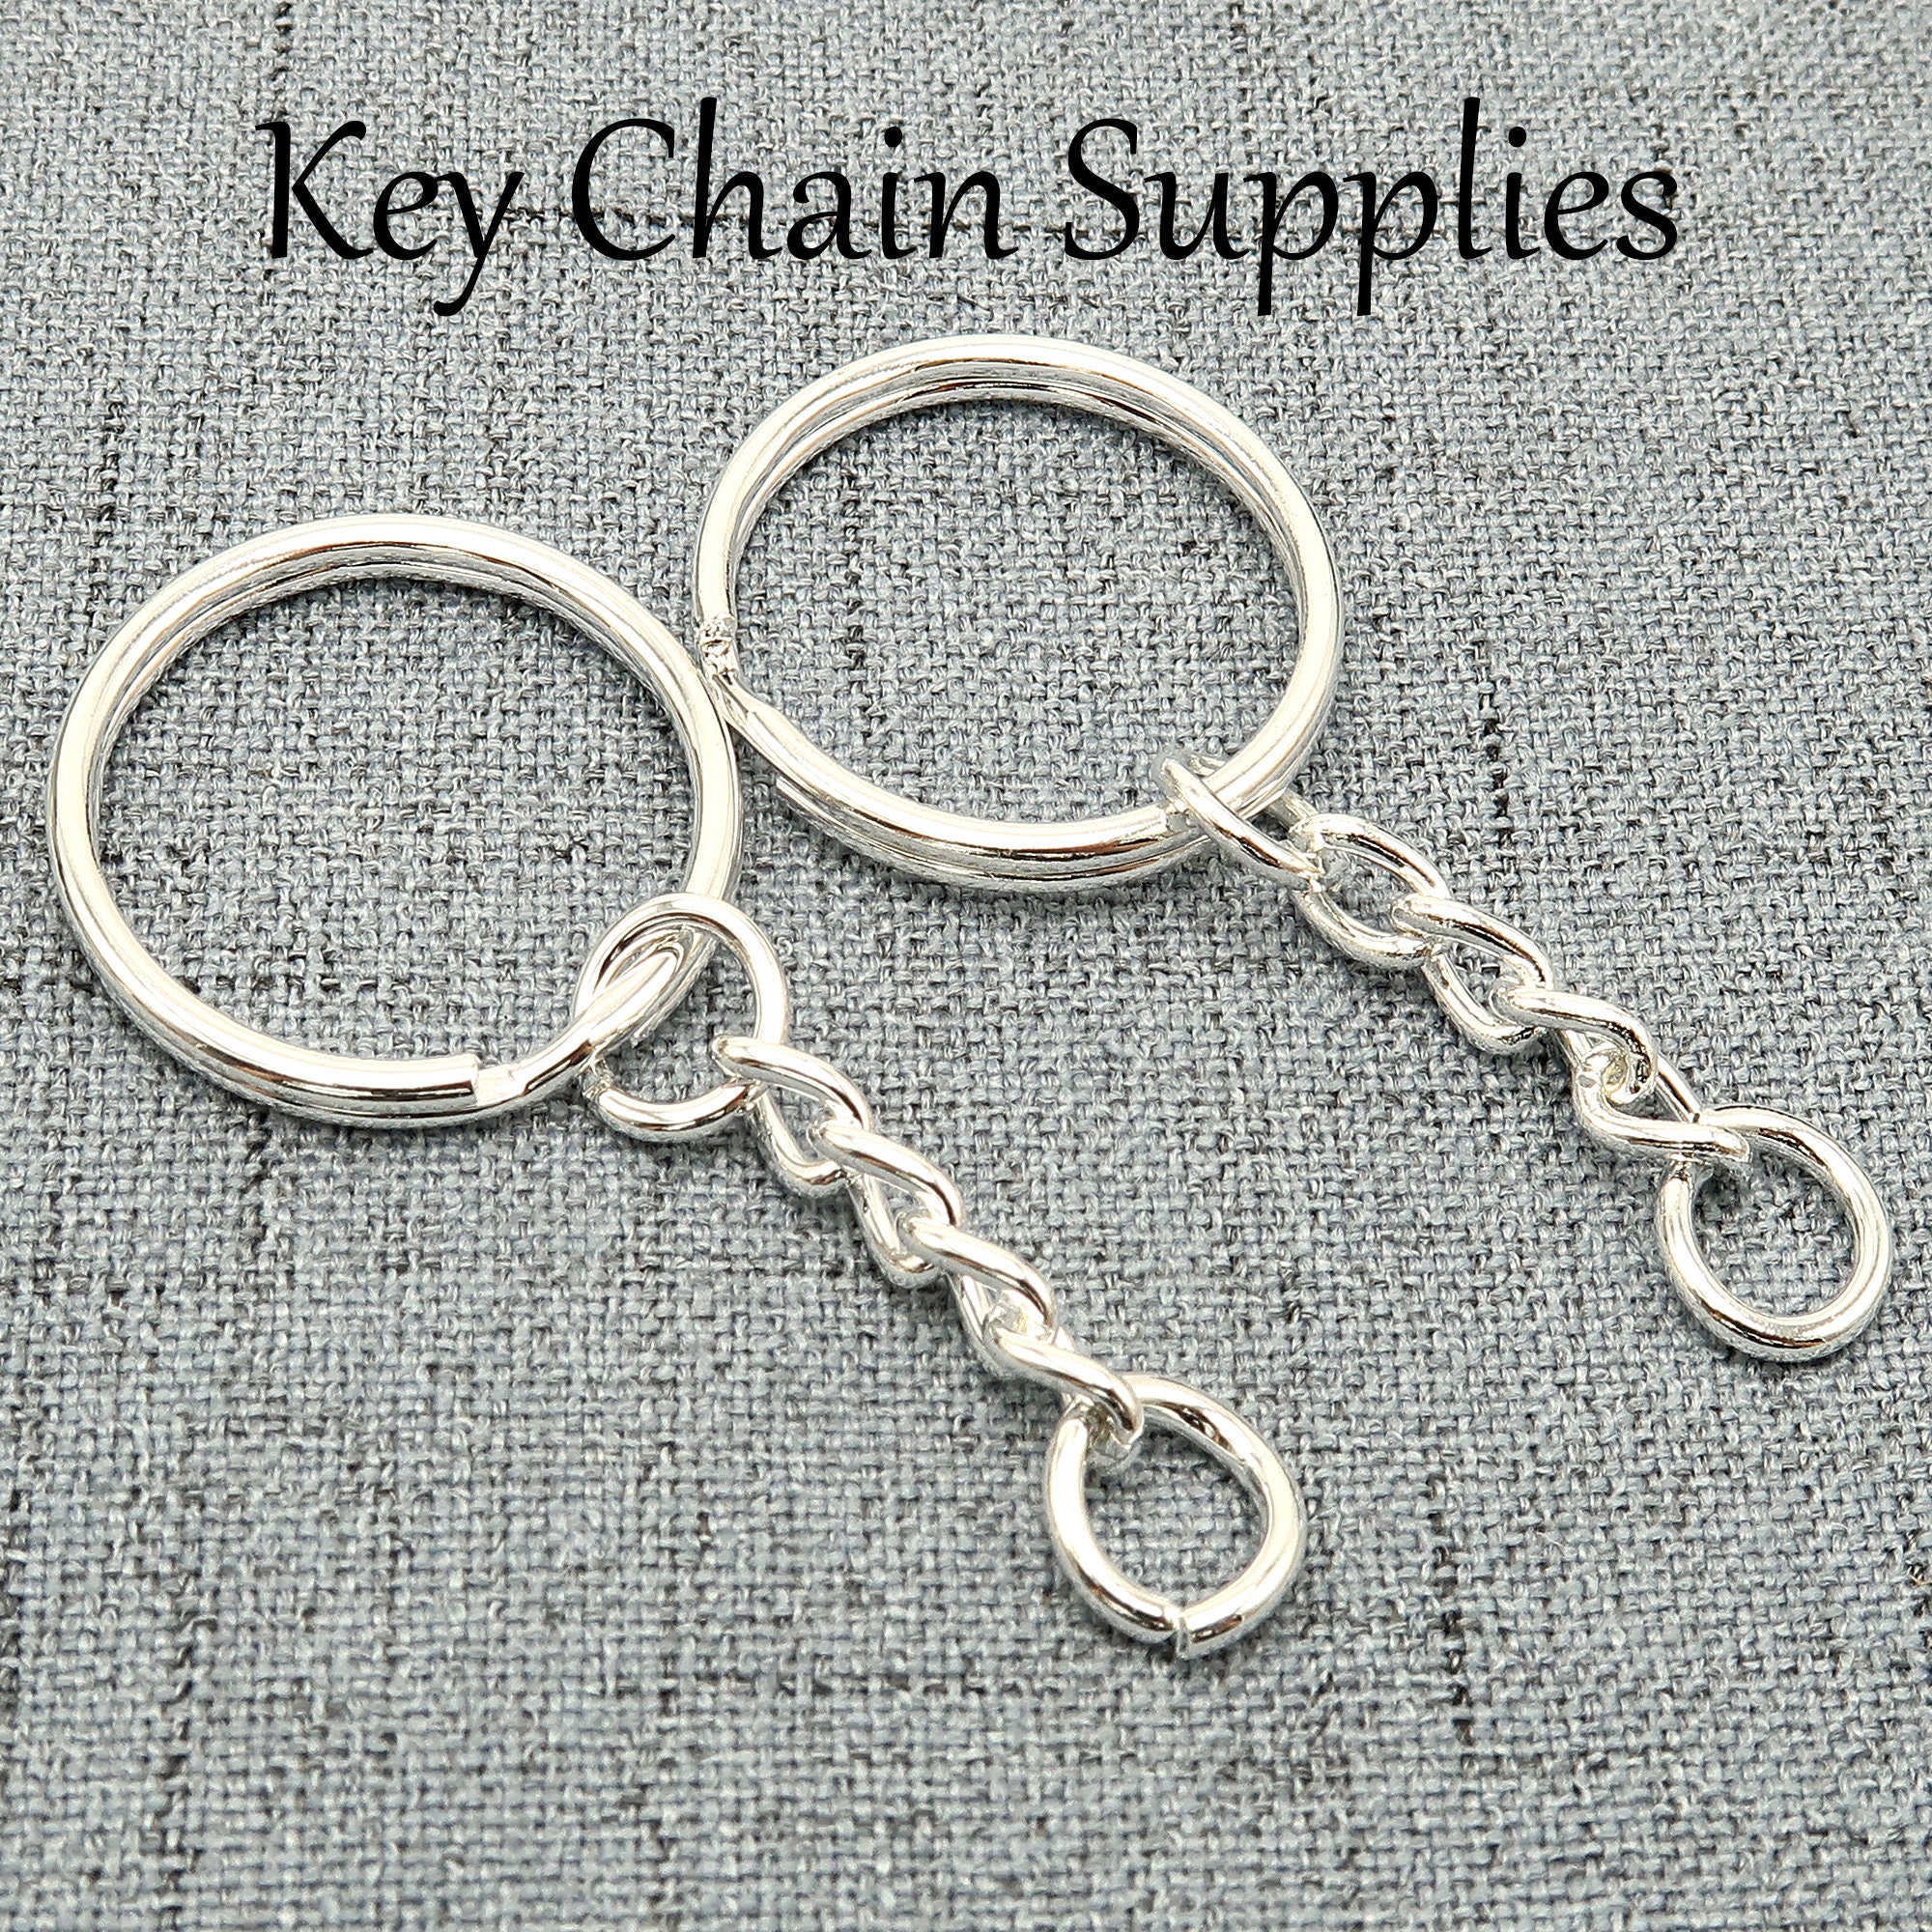 HXSEMAYIG 200pcs Key Rings Split Bulk Keyrings for Keychain and Crafts (25mm) Silver